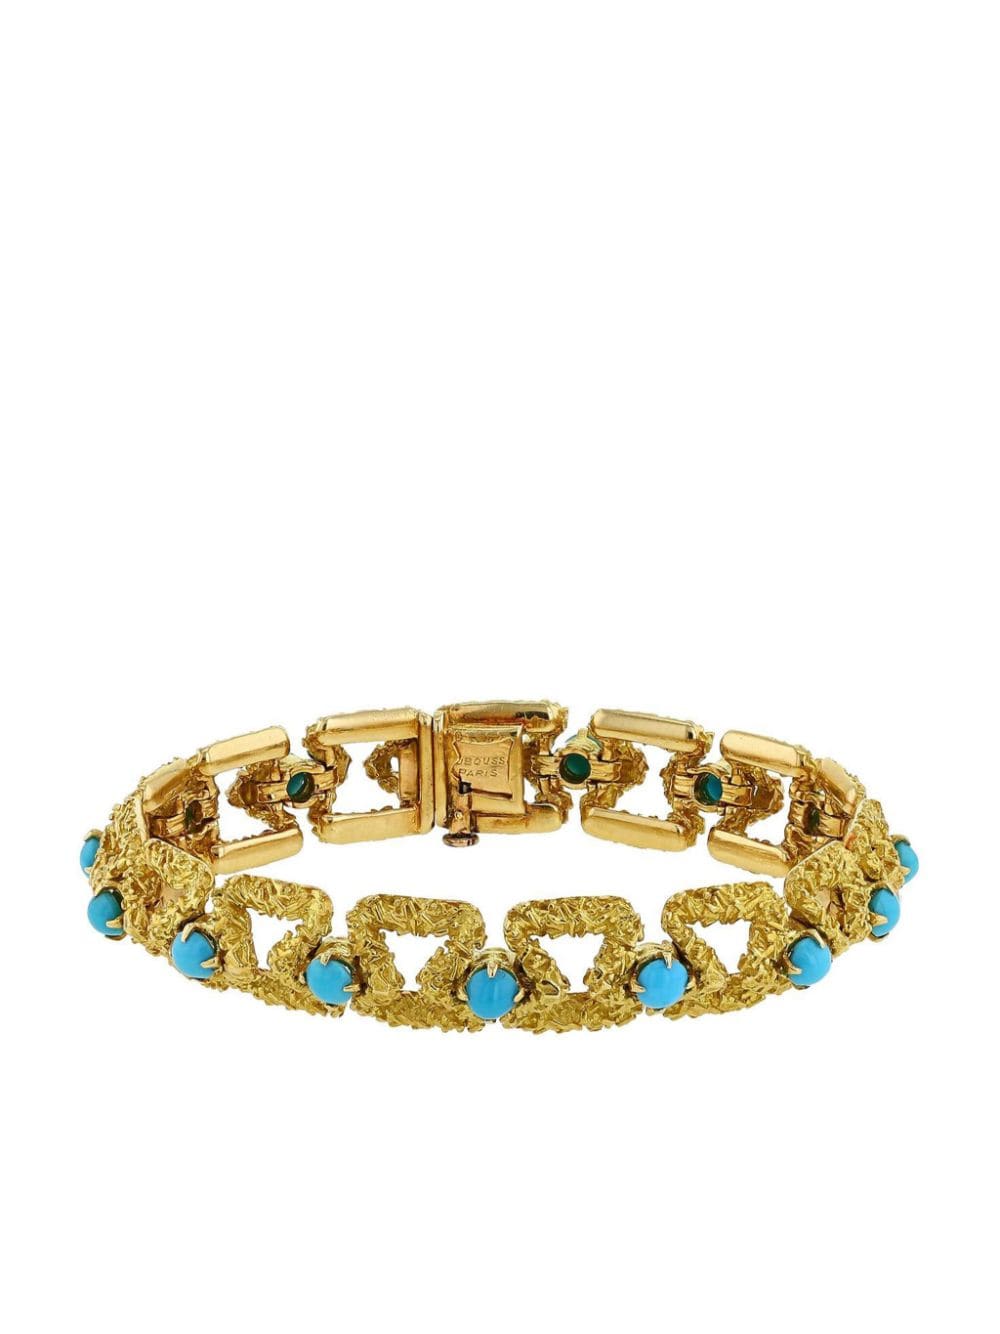 Mauboussin 1970s yellow gold turquoise link bracelet